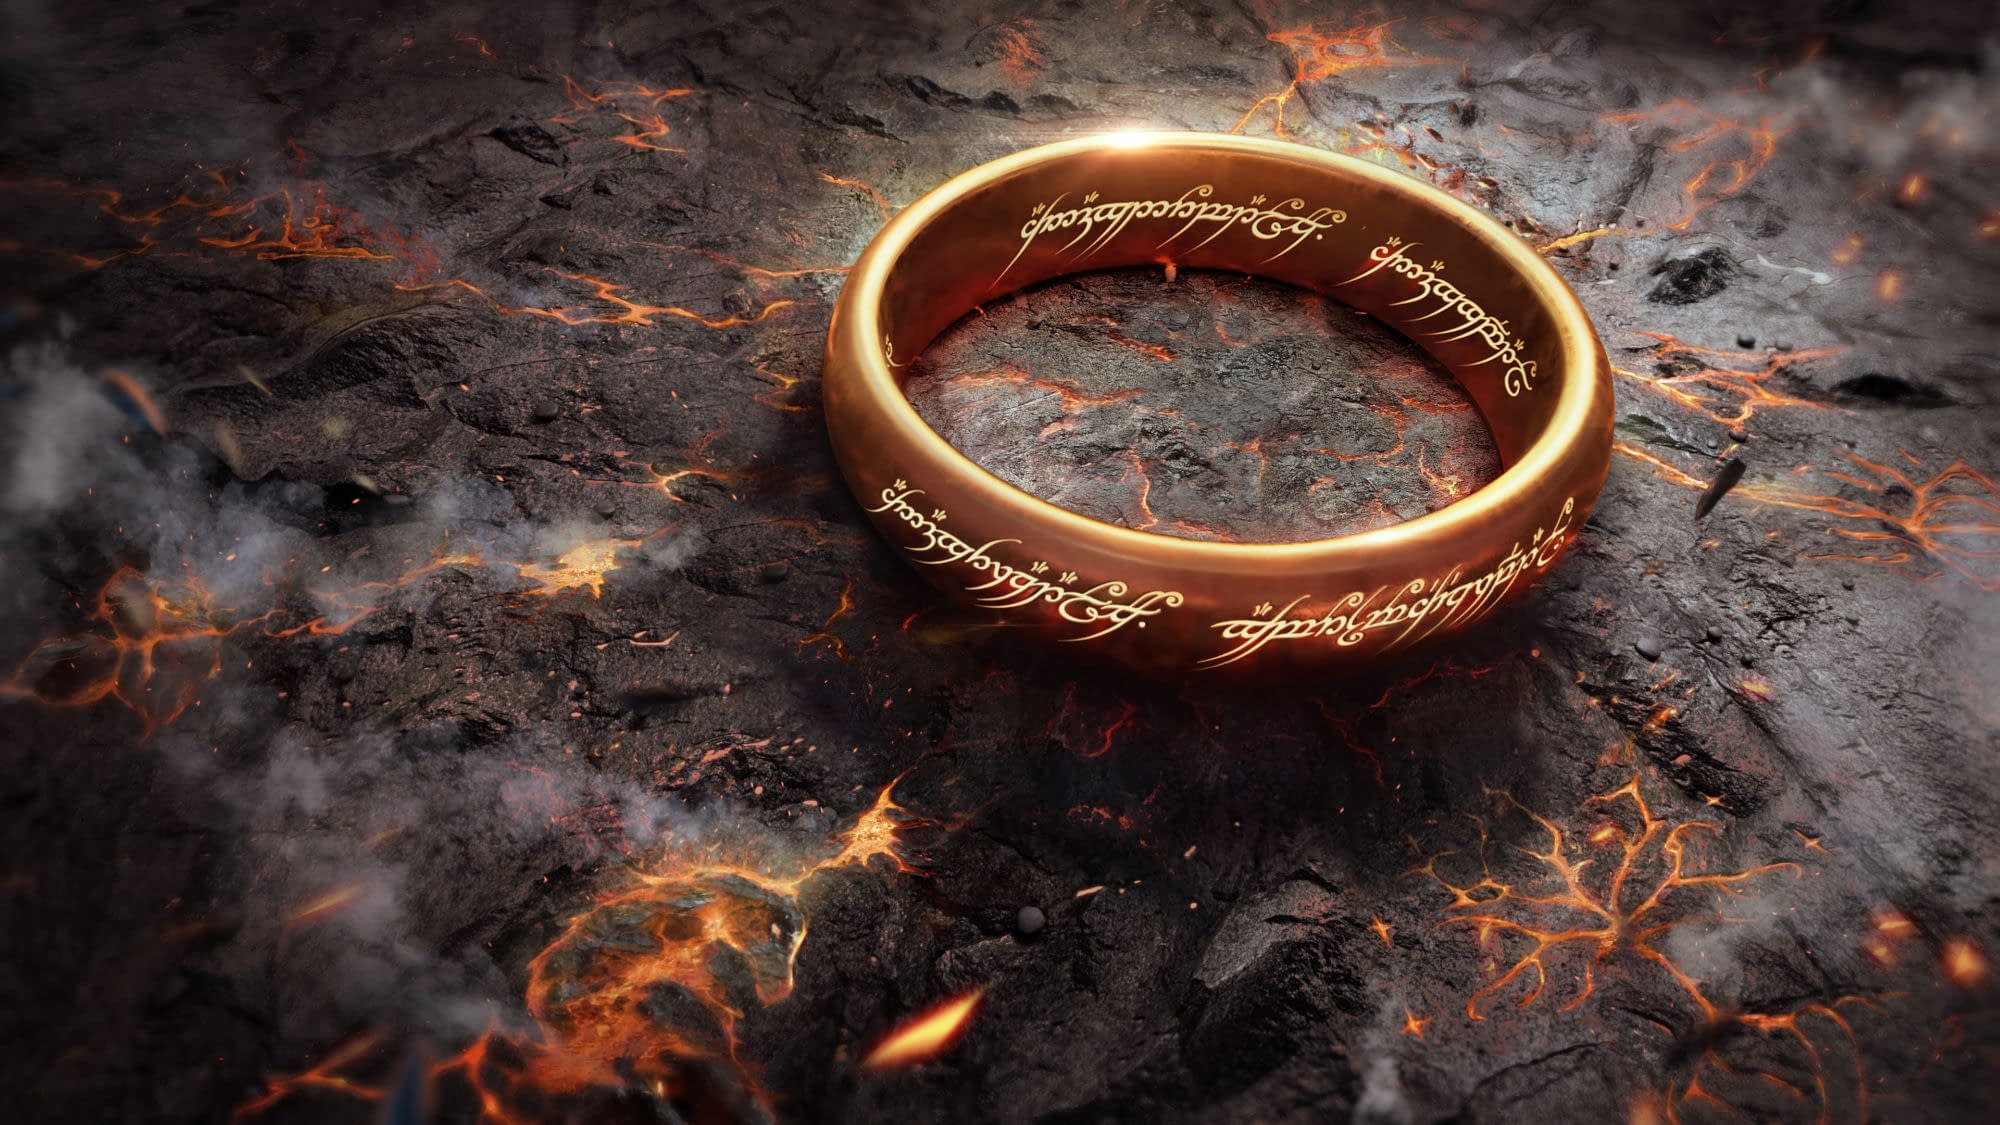 constante Sta in plaats daarvan op Modieus Special | The Lord of the Rings in gaming - PlaySense